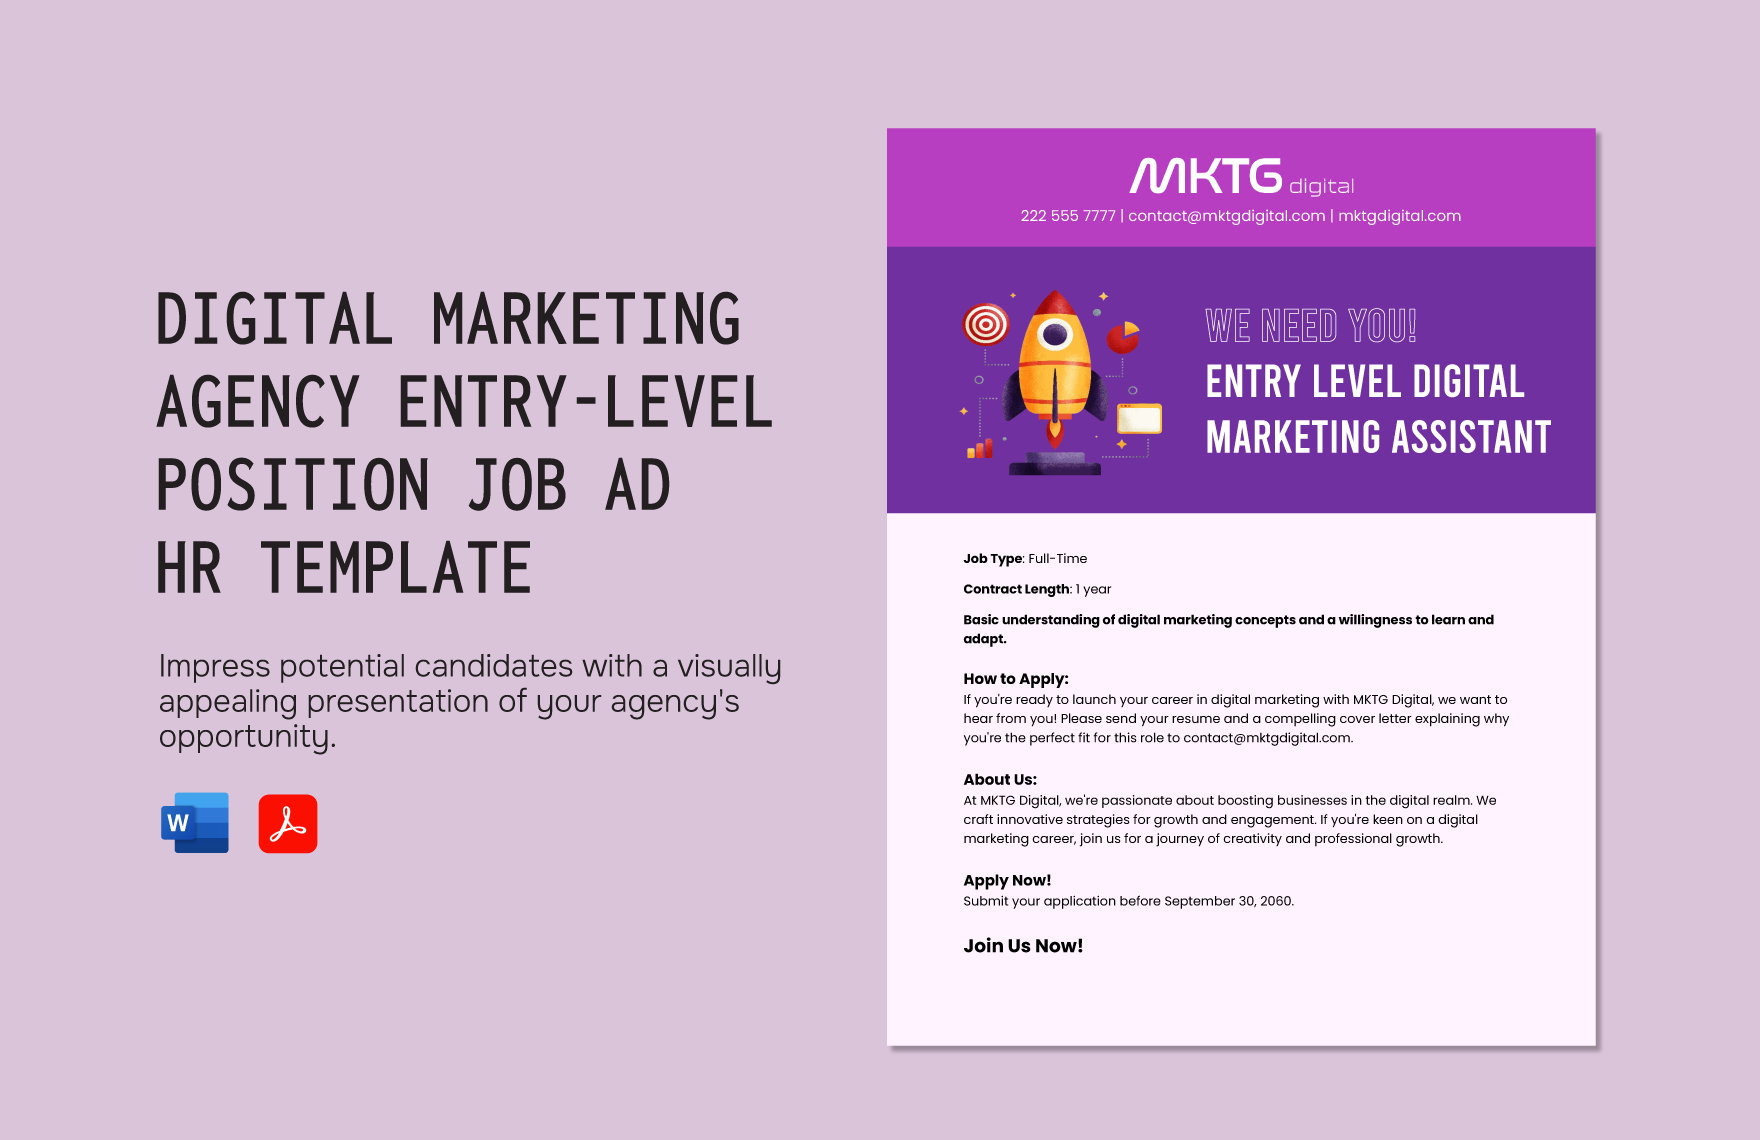 Digital Marketing Agency Entry-Level Position Job Ad HR Template